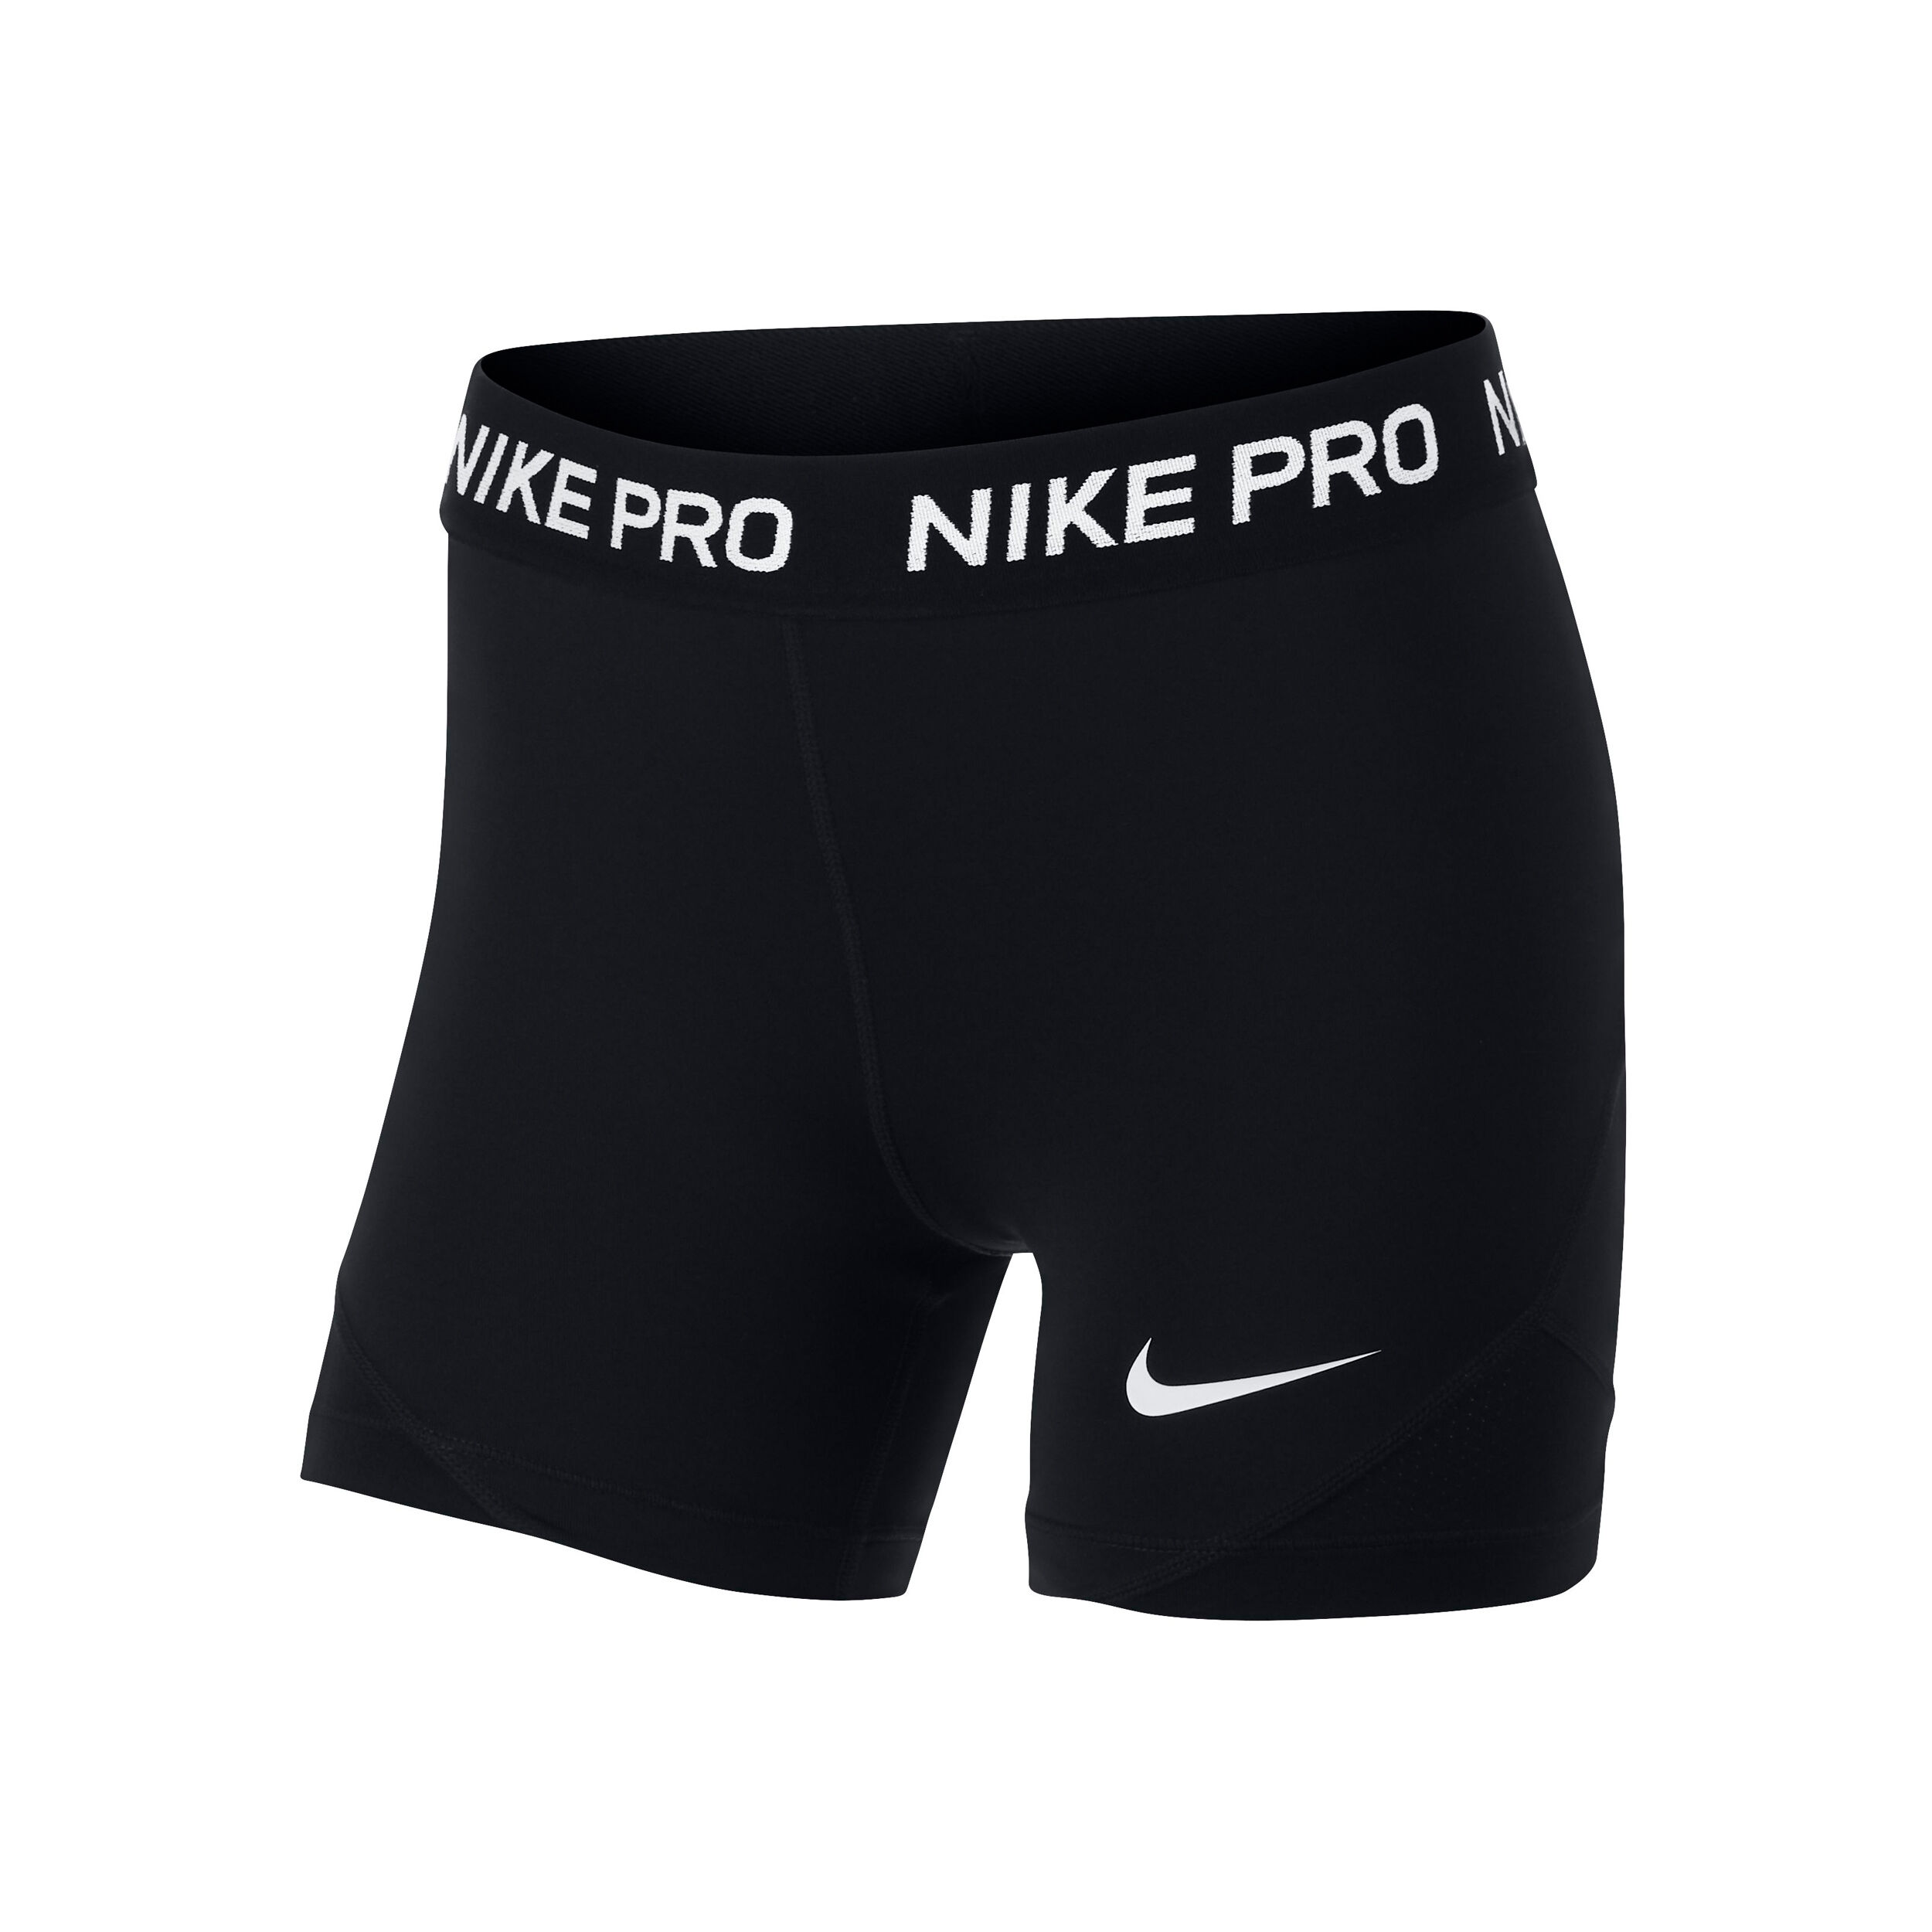 can you wear nike pro shorts alone